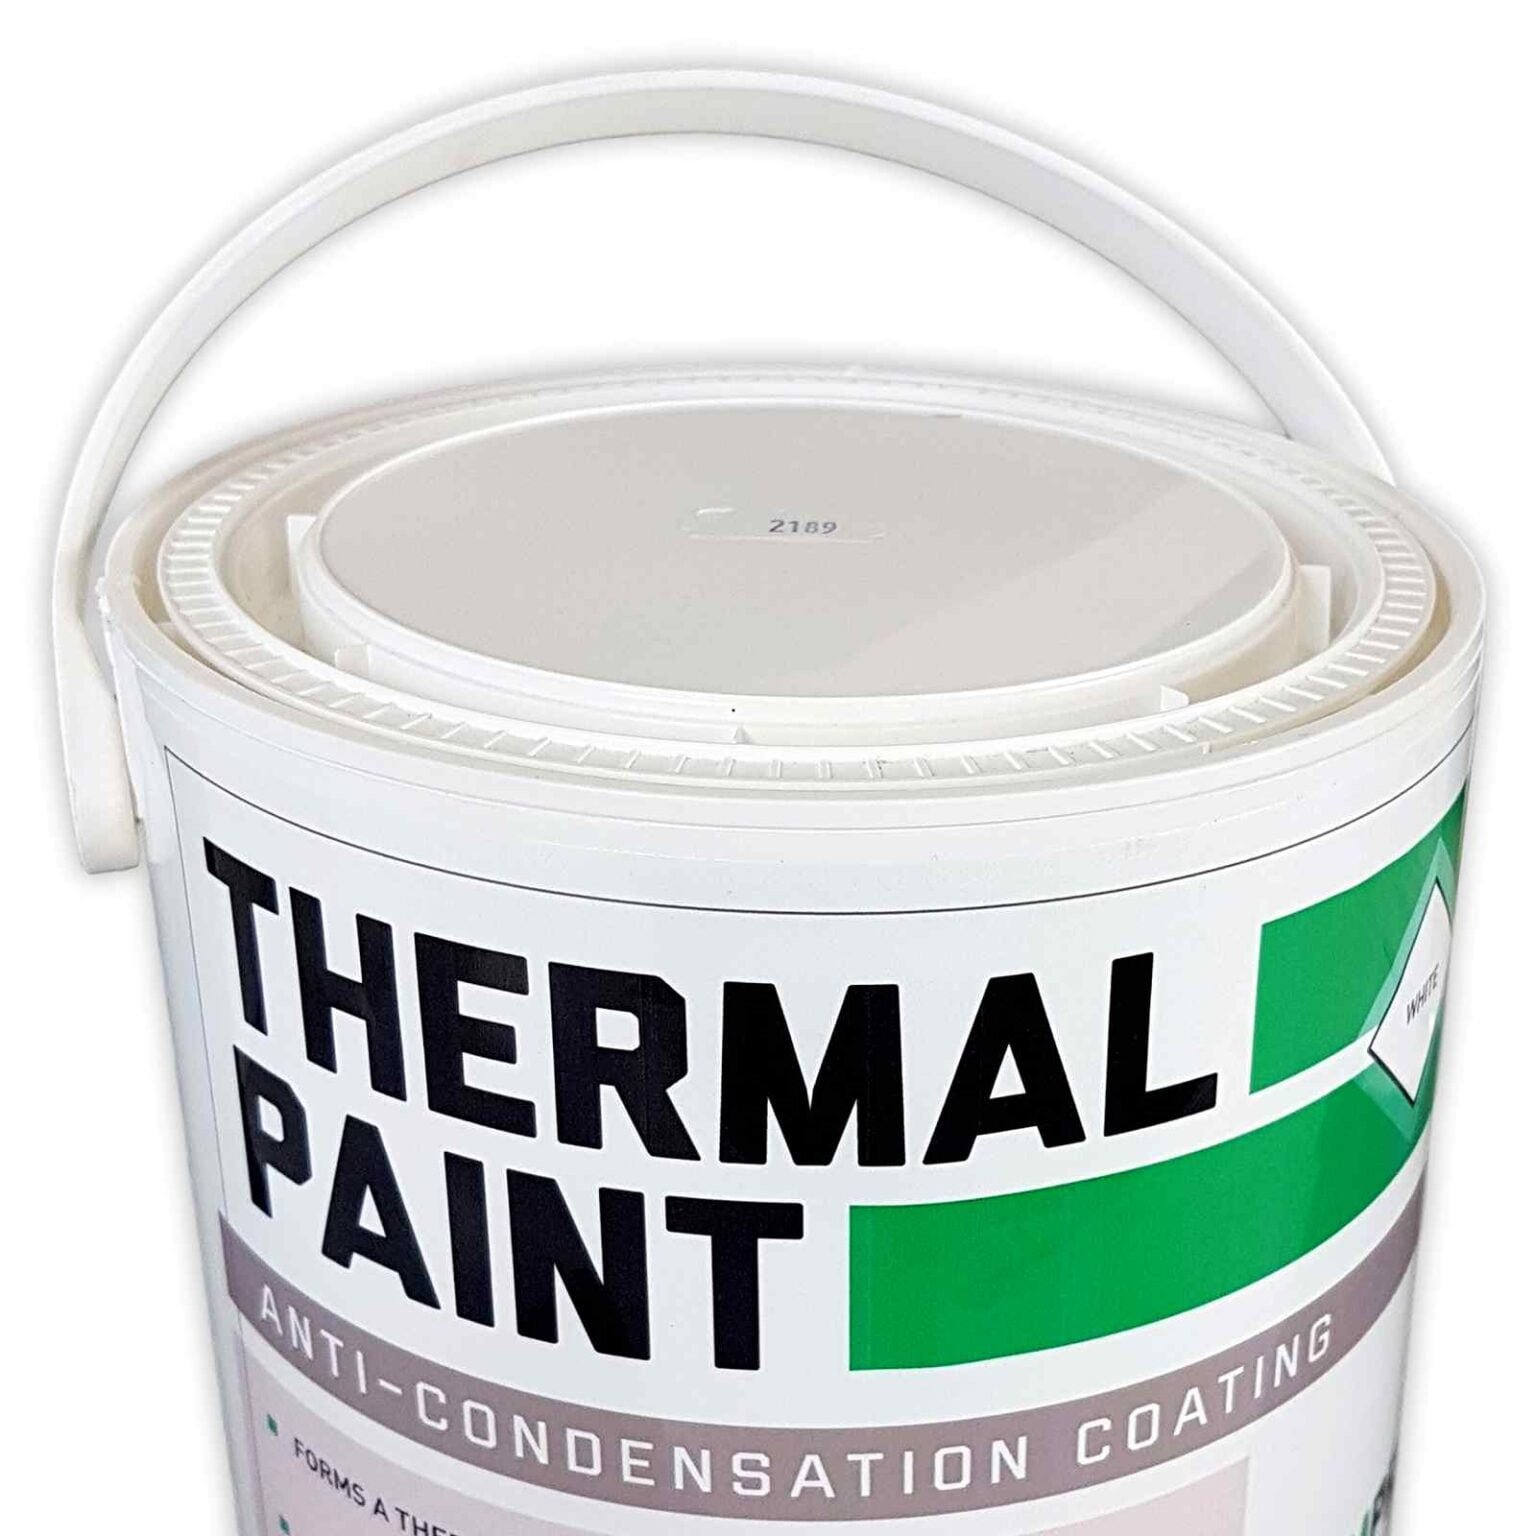 Anti condensation paint uk